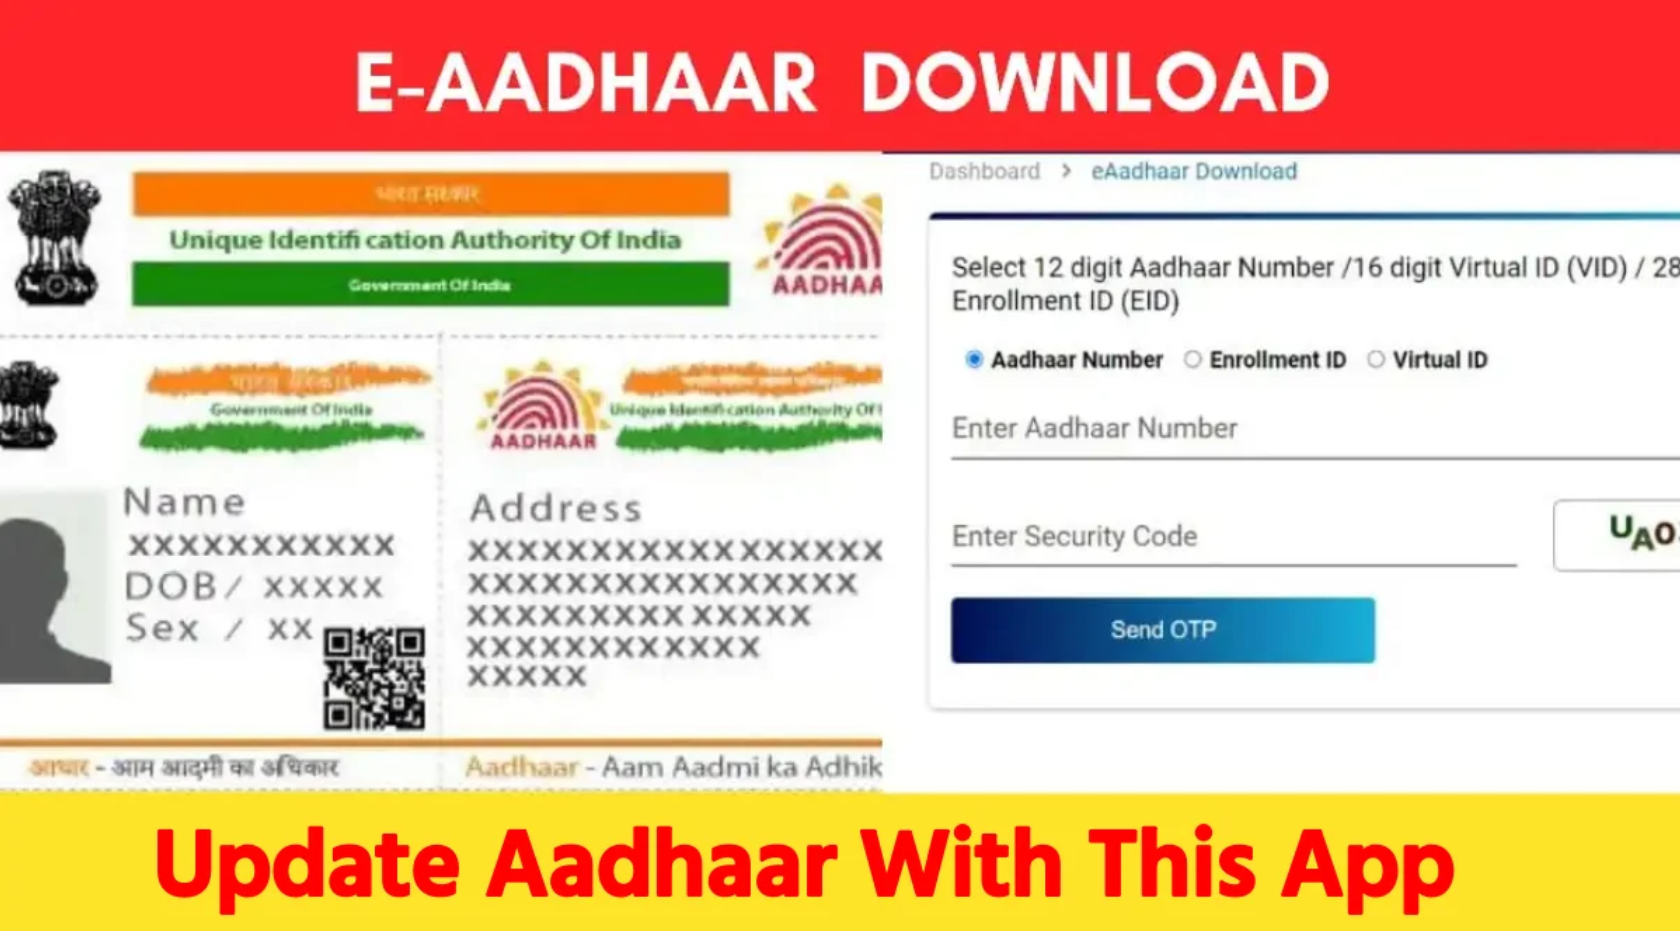 Update Aadhaar With This App